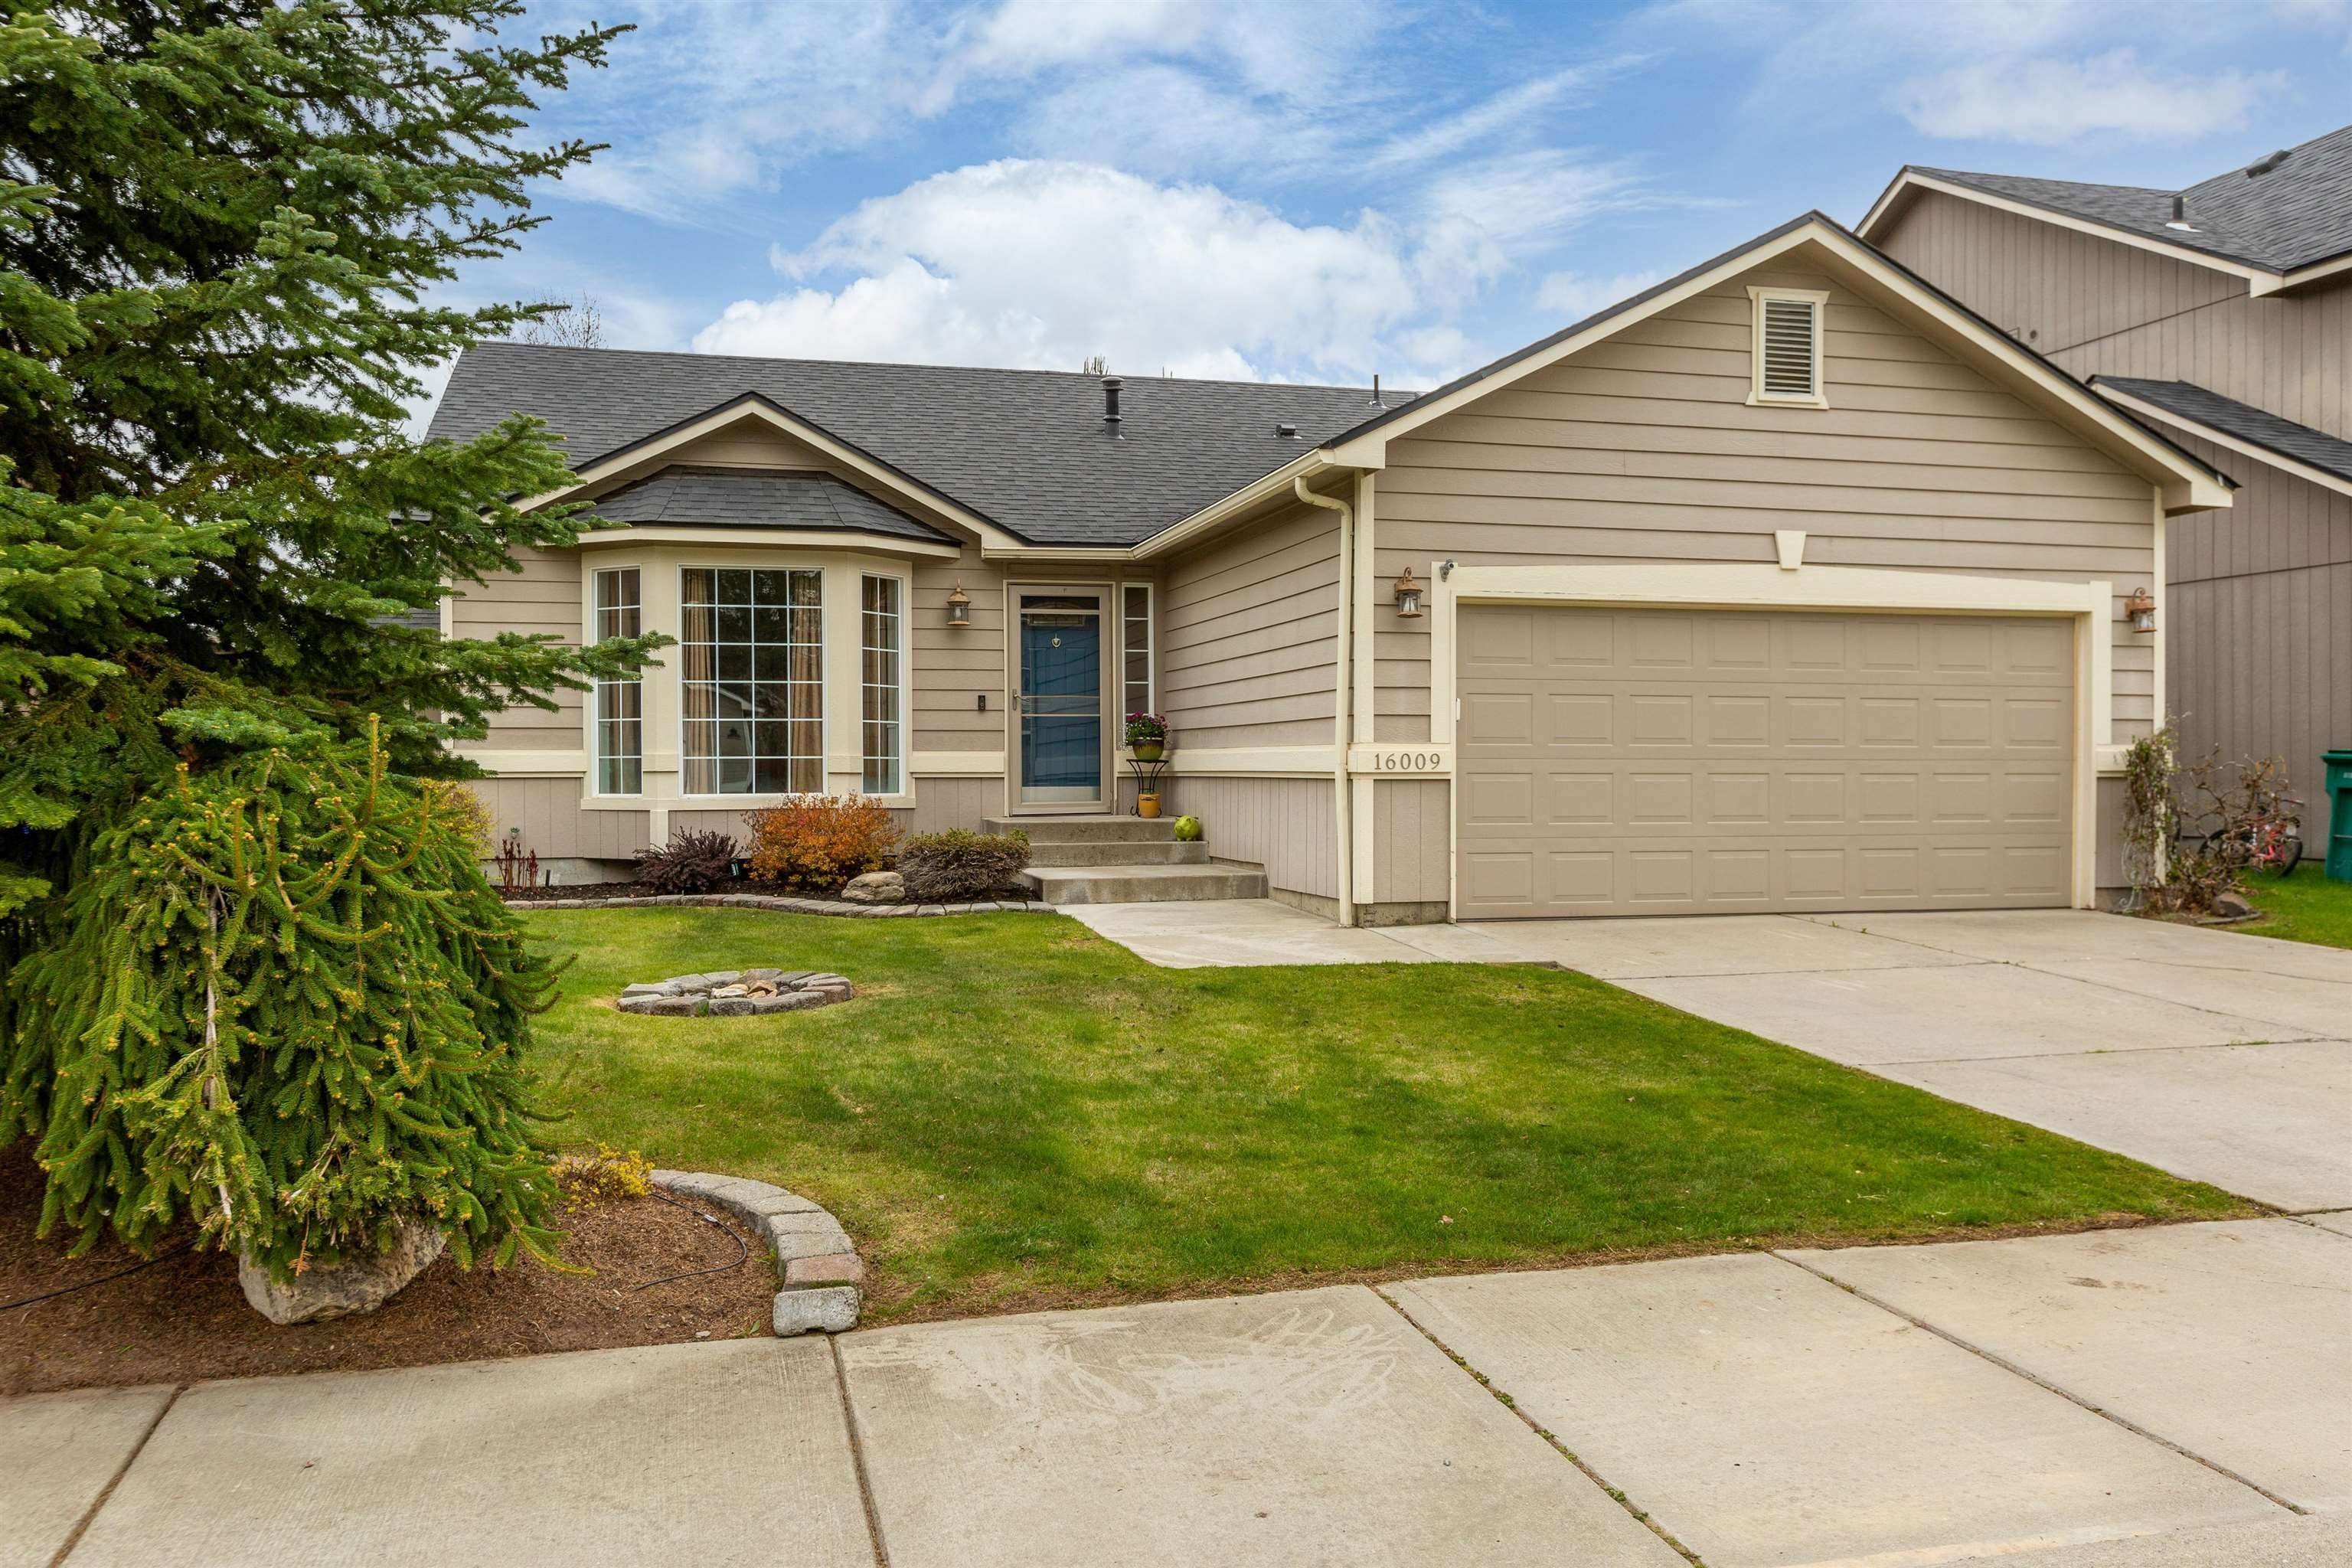 3. Single Family Homes for Sale at 16009 N Franklin Street Spokane, Washington 99208 United States